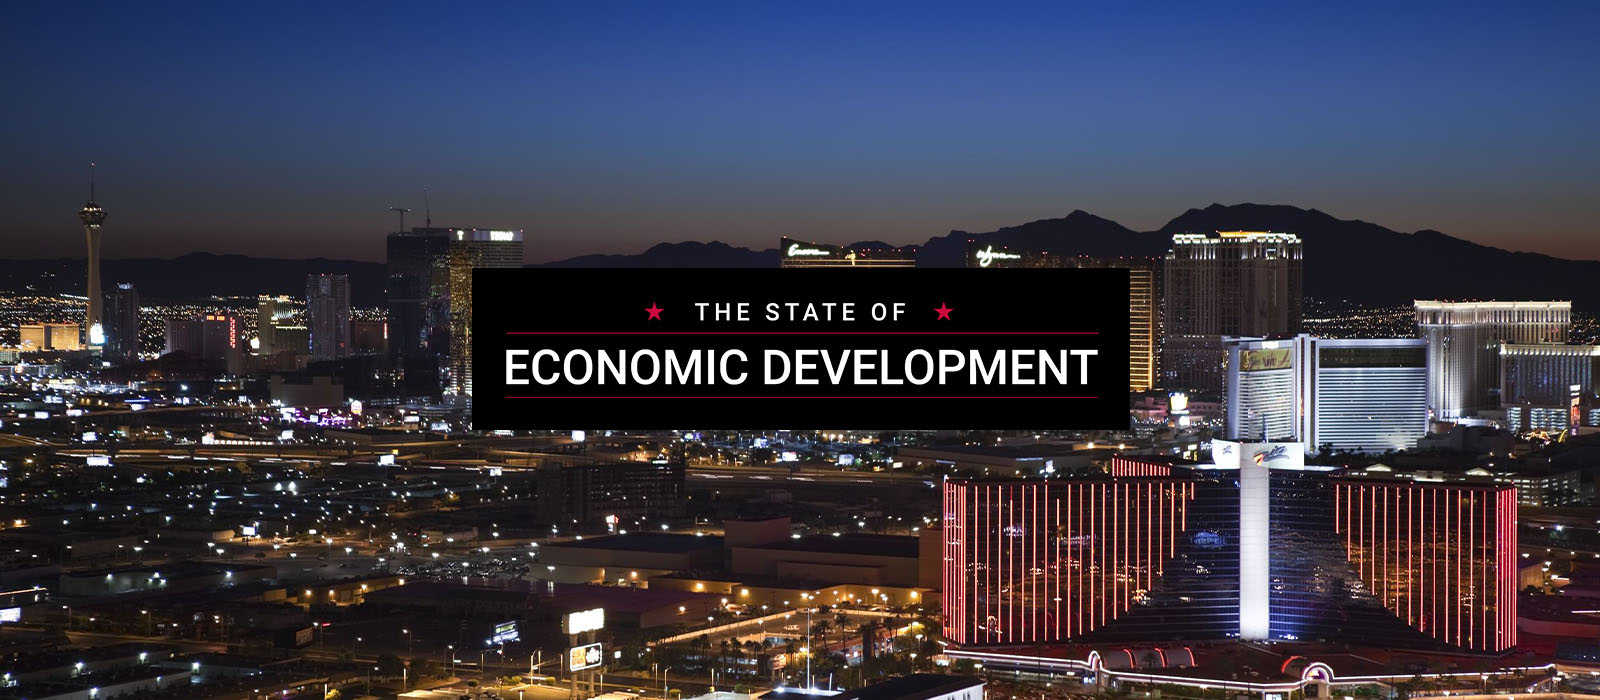 The State of Economic Development banner